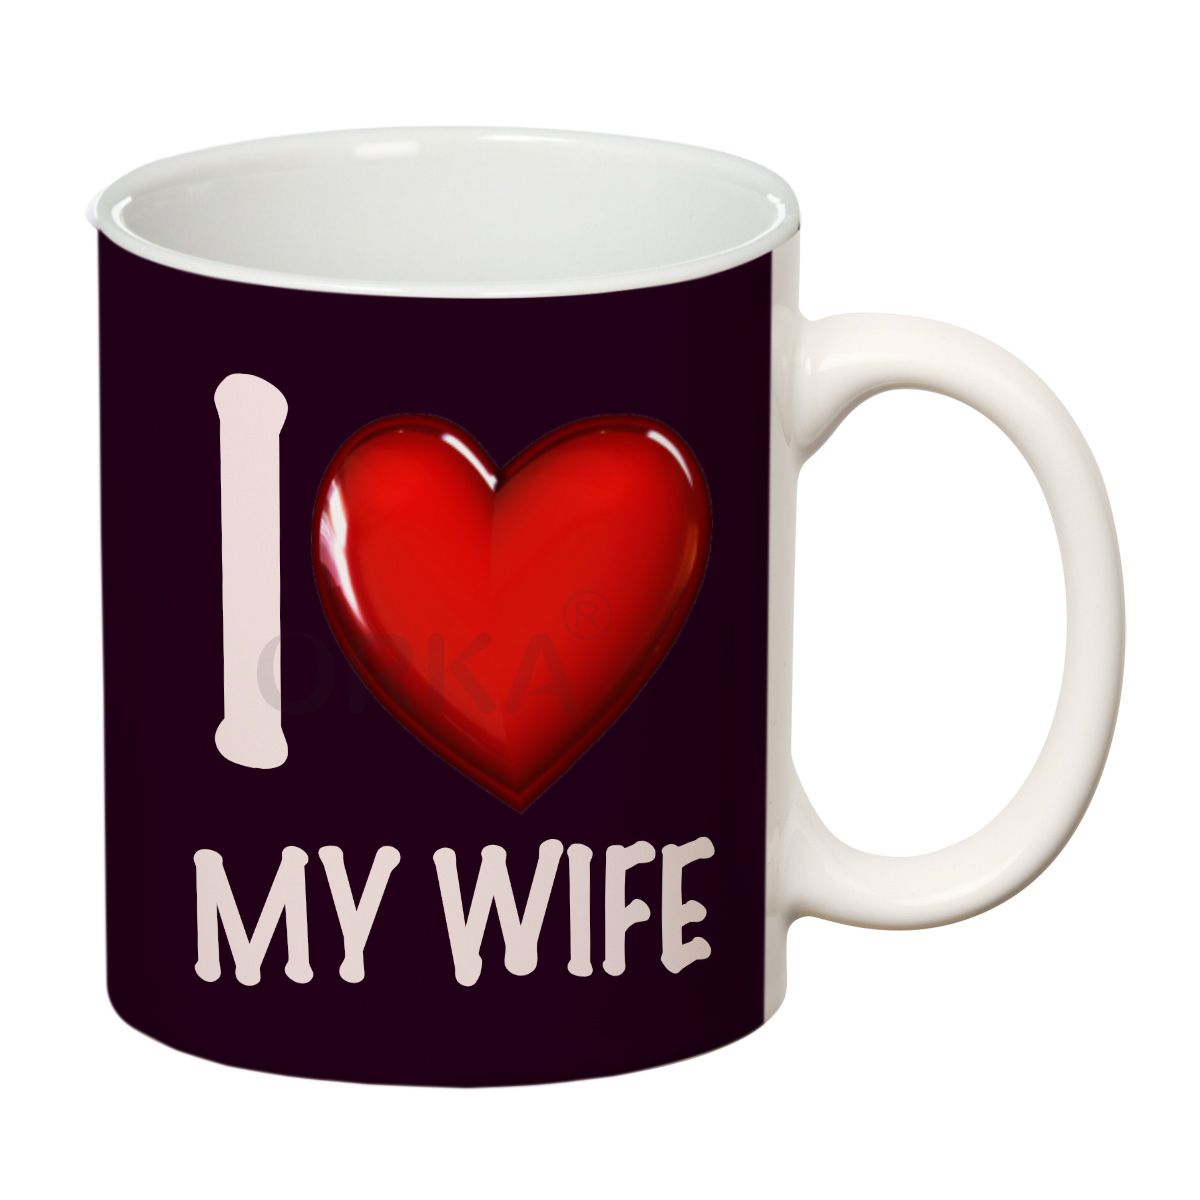 ORKA Coffee Mug Quotes Printed( I Love Wife ) Theme 11 Oz   